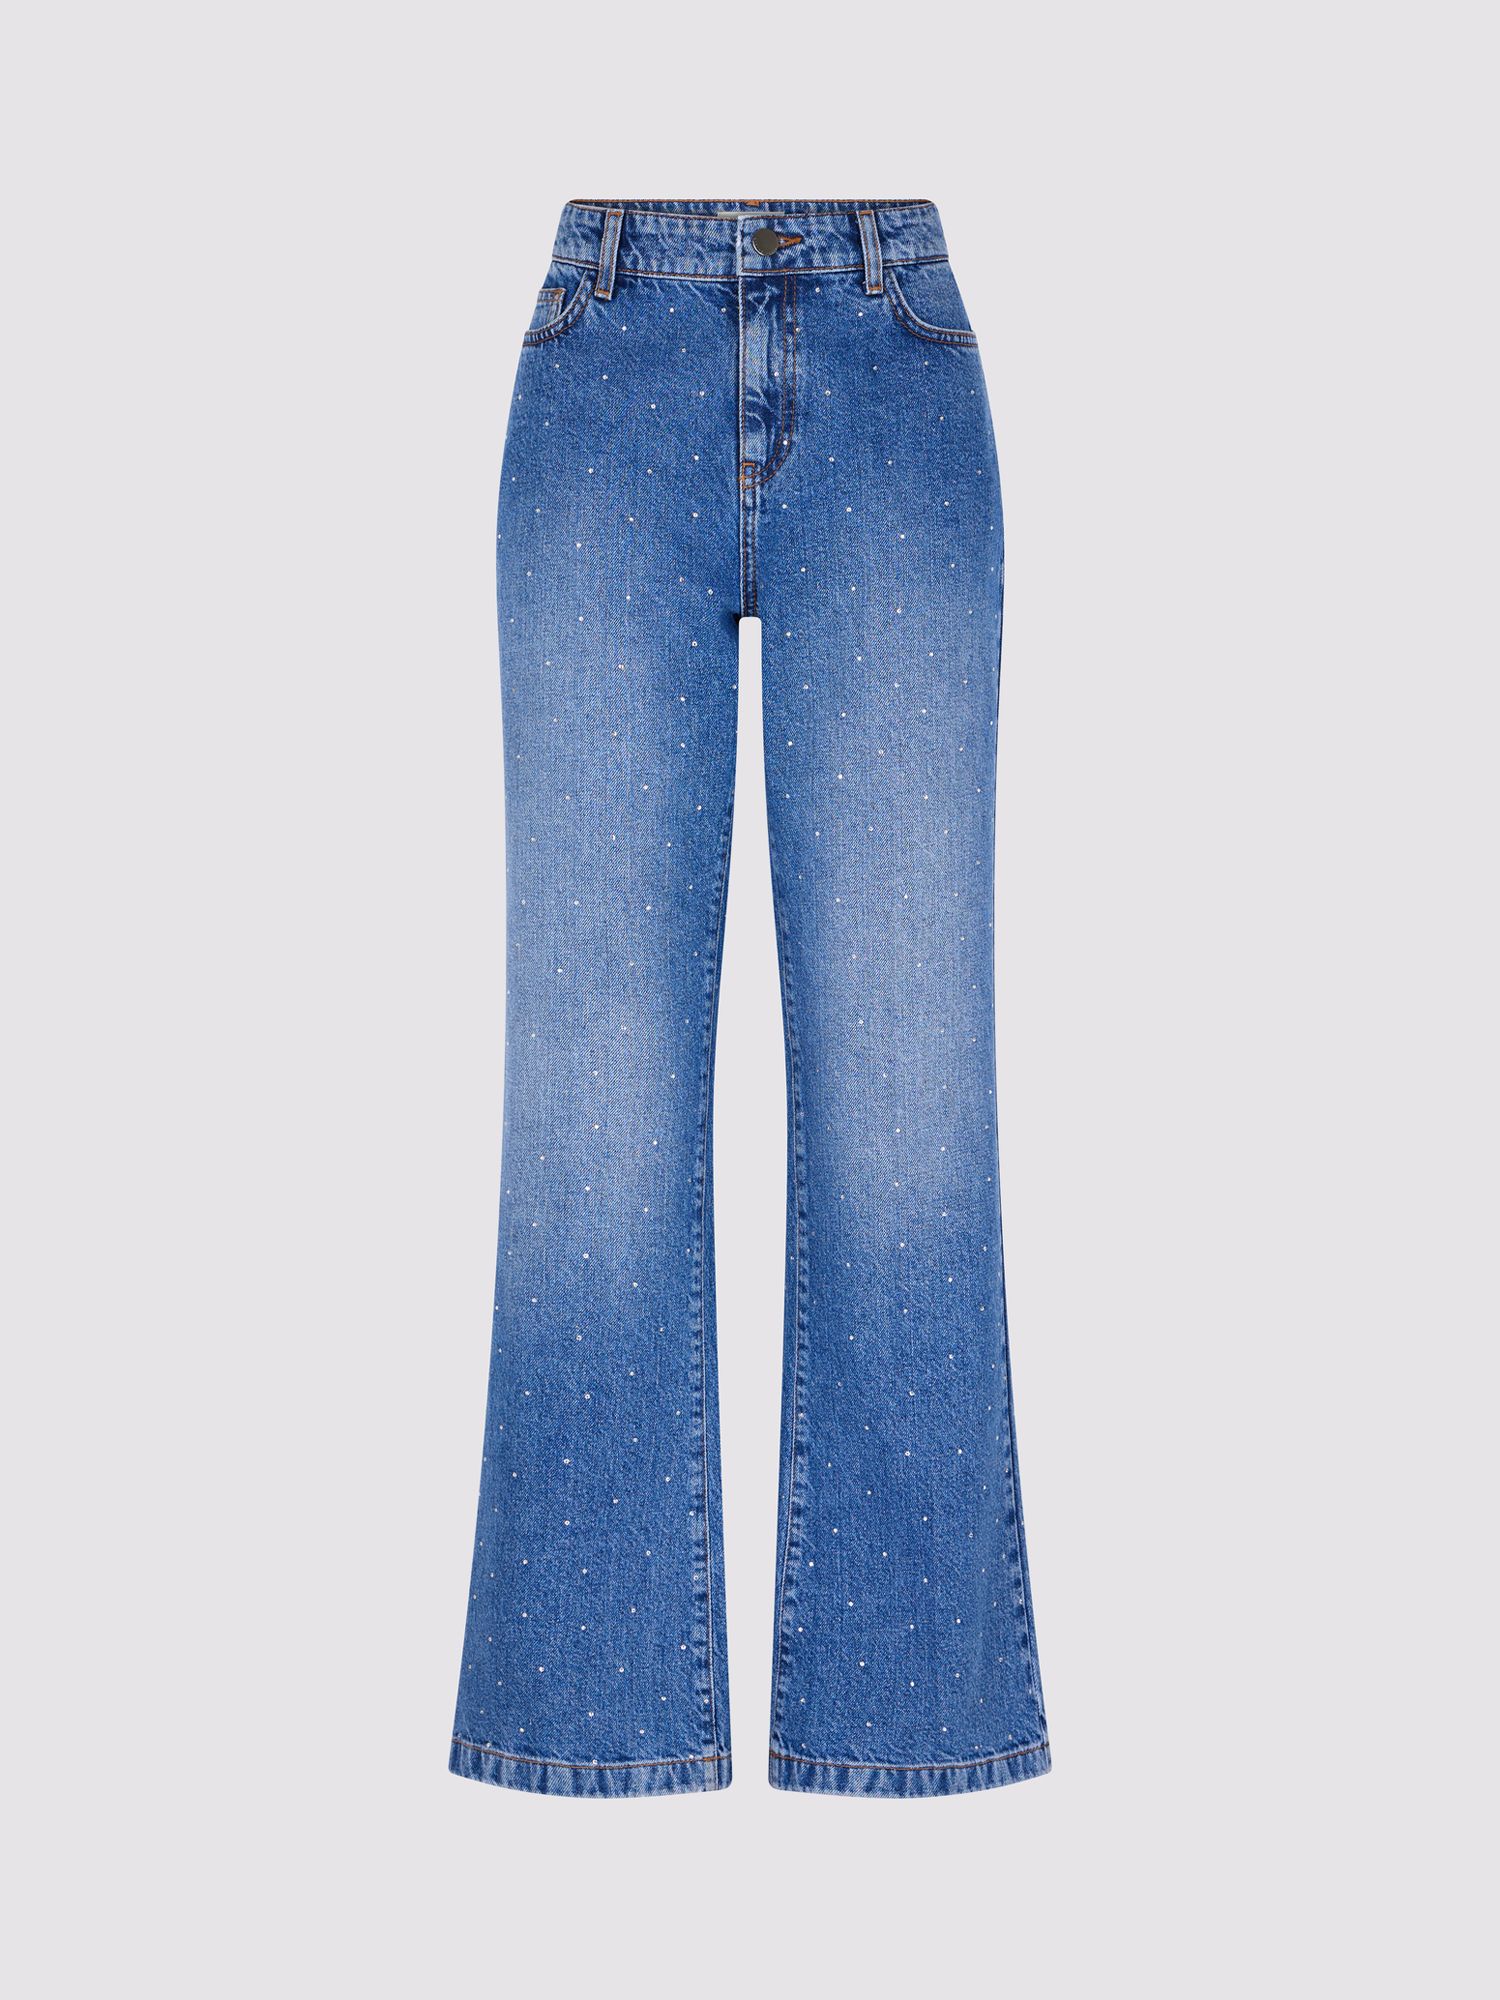 Gerard Darel Coline Rhinestone Bootcut Jeans, Blue, 10